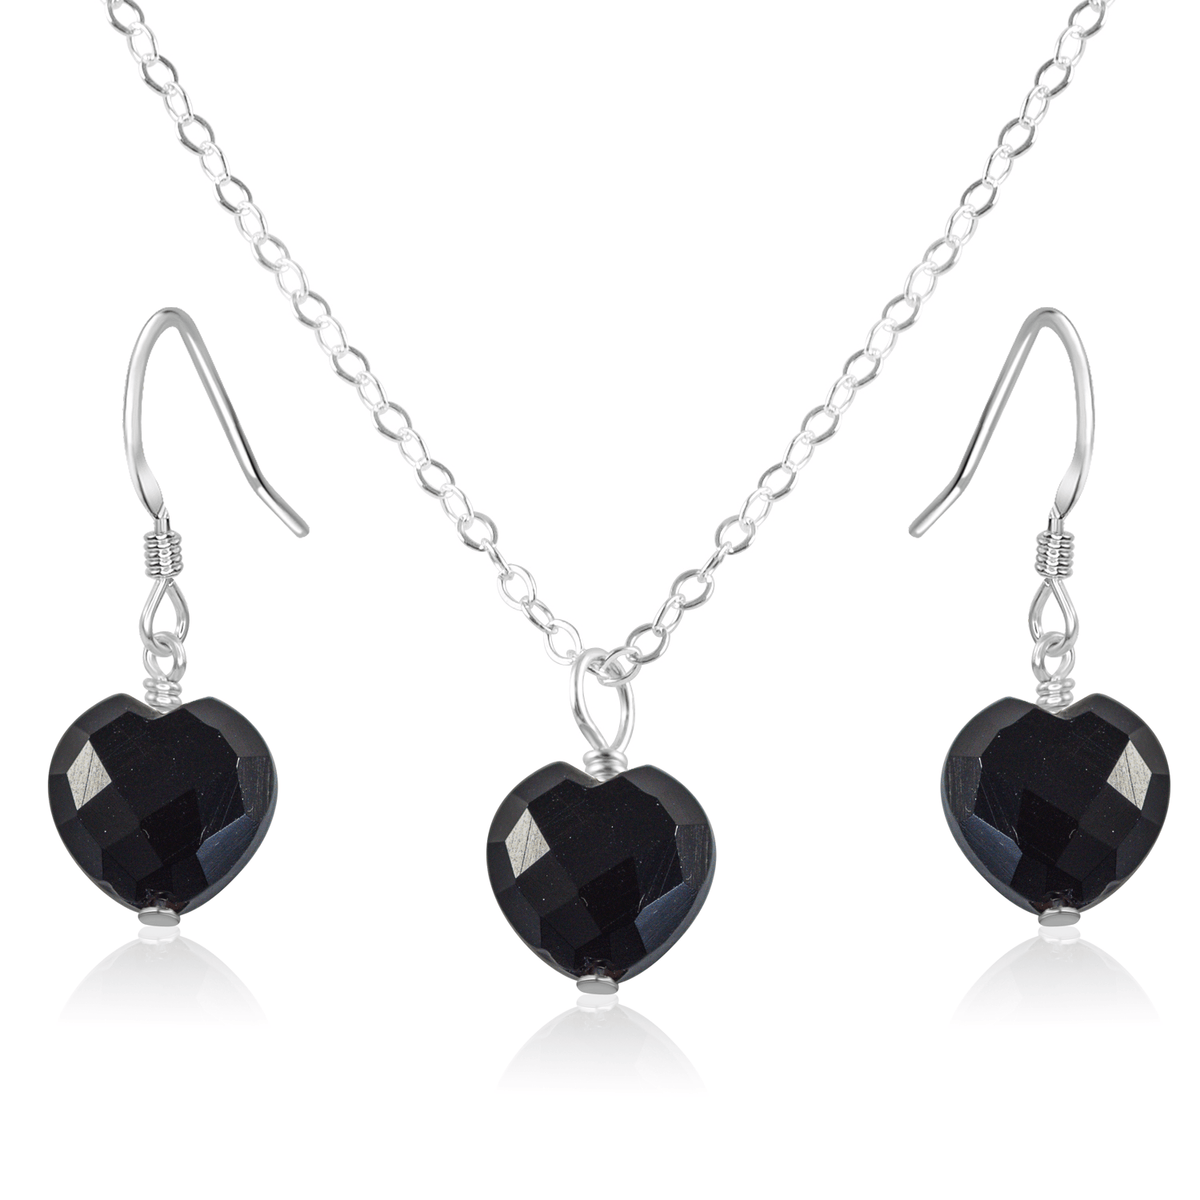 Black Onyx Crystal Heart Jewellery Set - Black Onyx Crystal Heart Jewellery Set - Sterling Silver / Cable / Necklace & Earrings - Luna Tide Handmade Crystal Jewellery